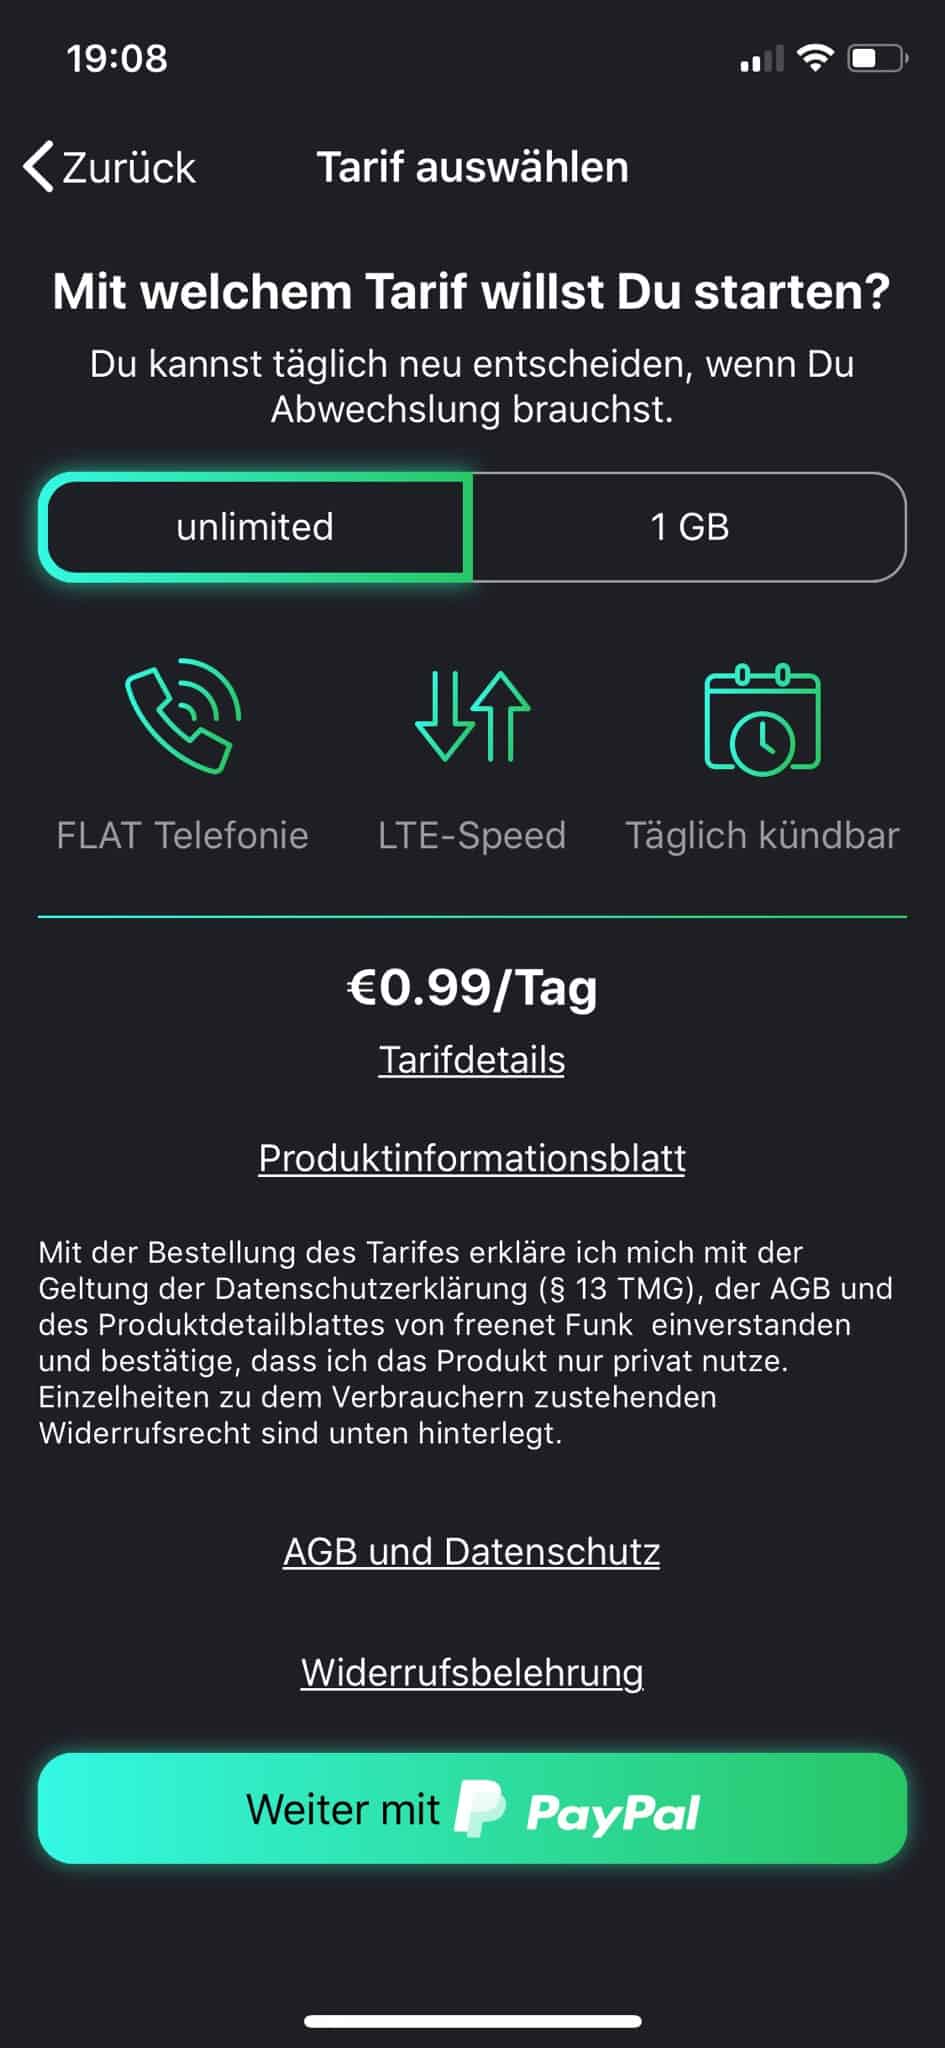 freenet FUNK - Smartphone-App - Tarif auswählen - freenet FUNK unlimited-Tarif